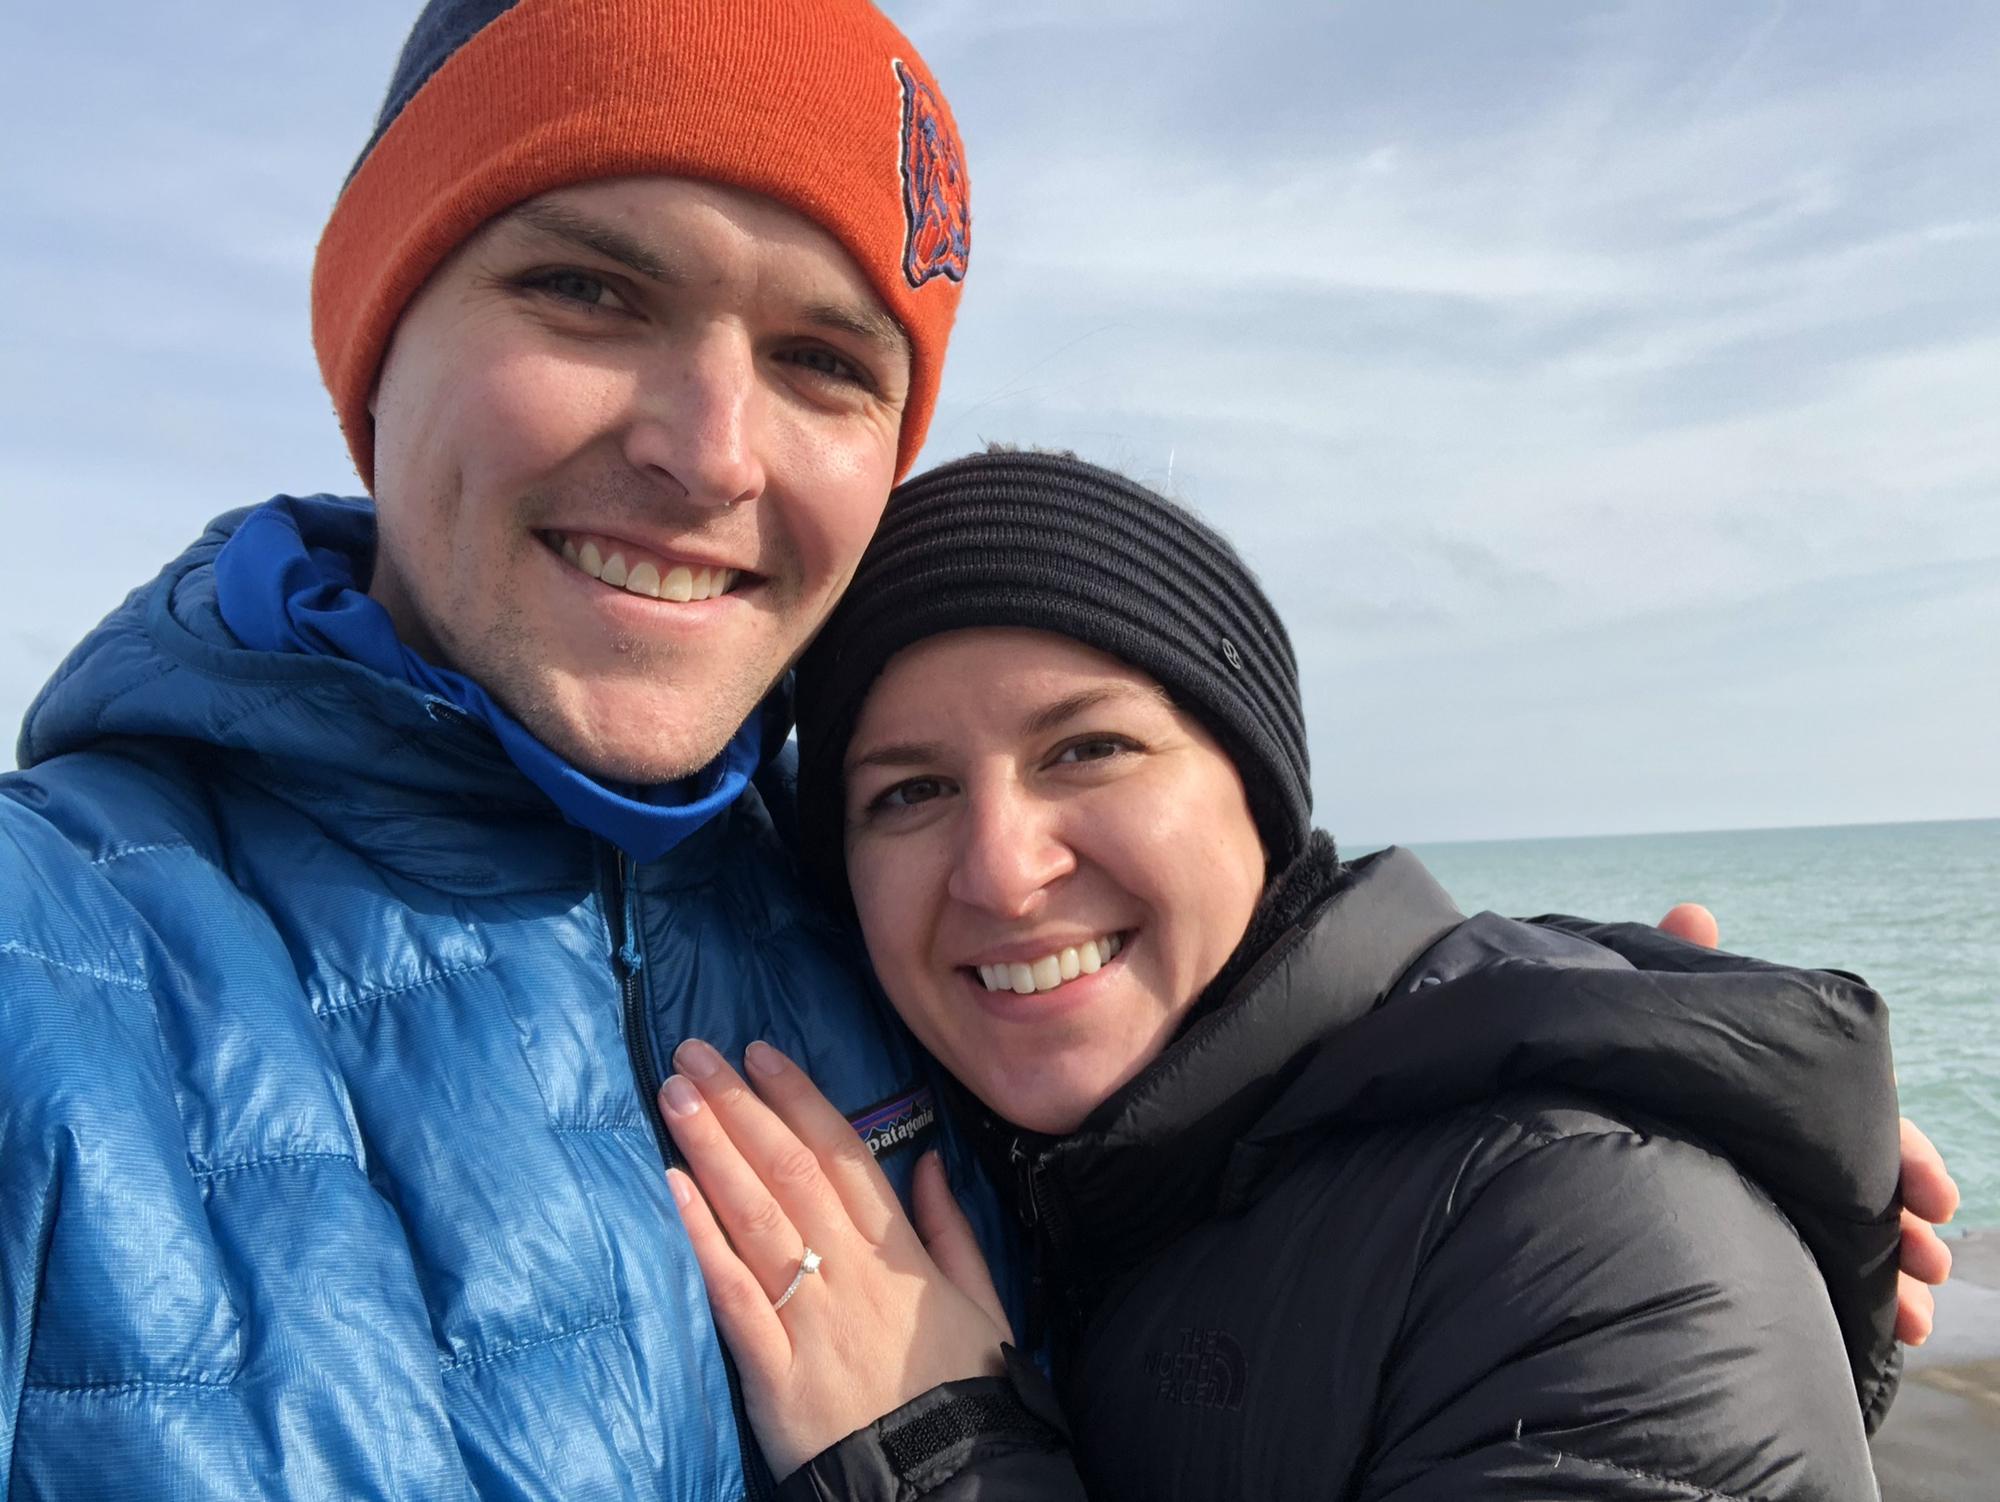 Engaged!!!! Lake Michigan, Chicago, IL